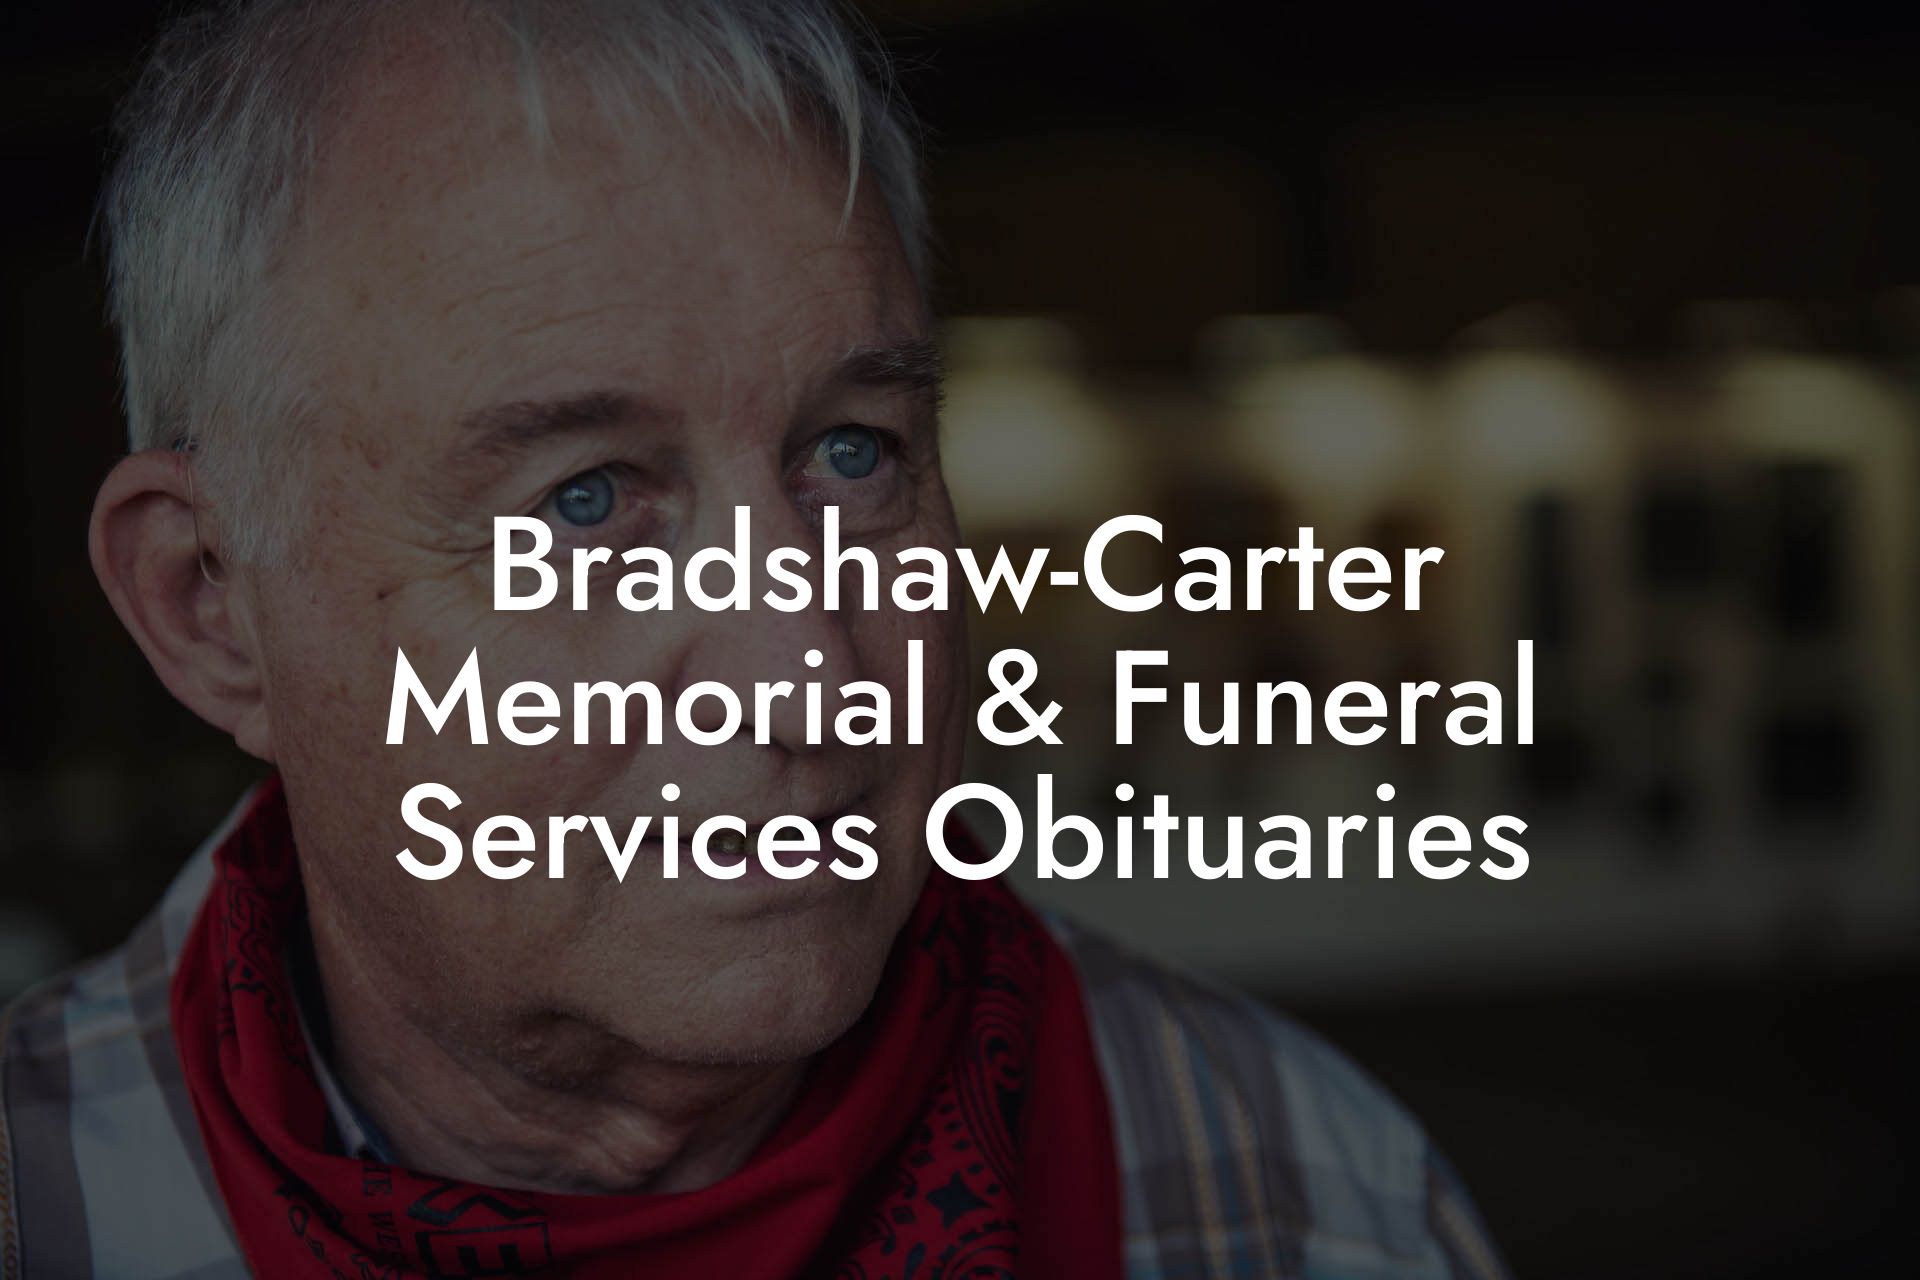 Bradshaw-Carter Memorial & Funeral Services Obituaries